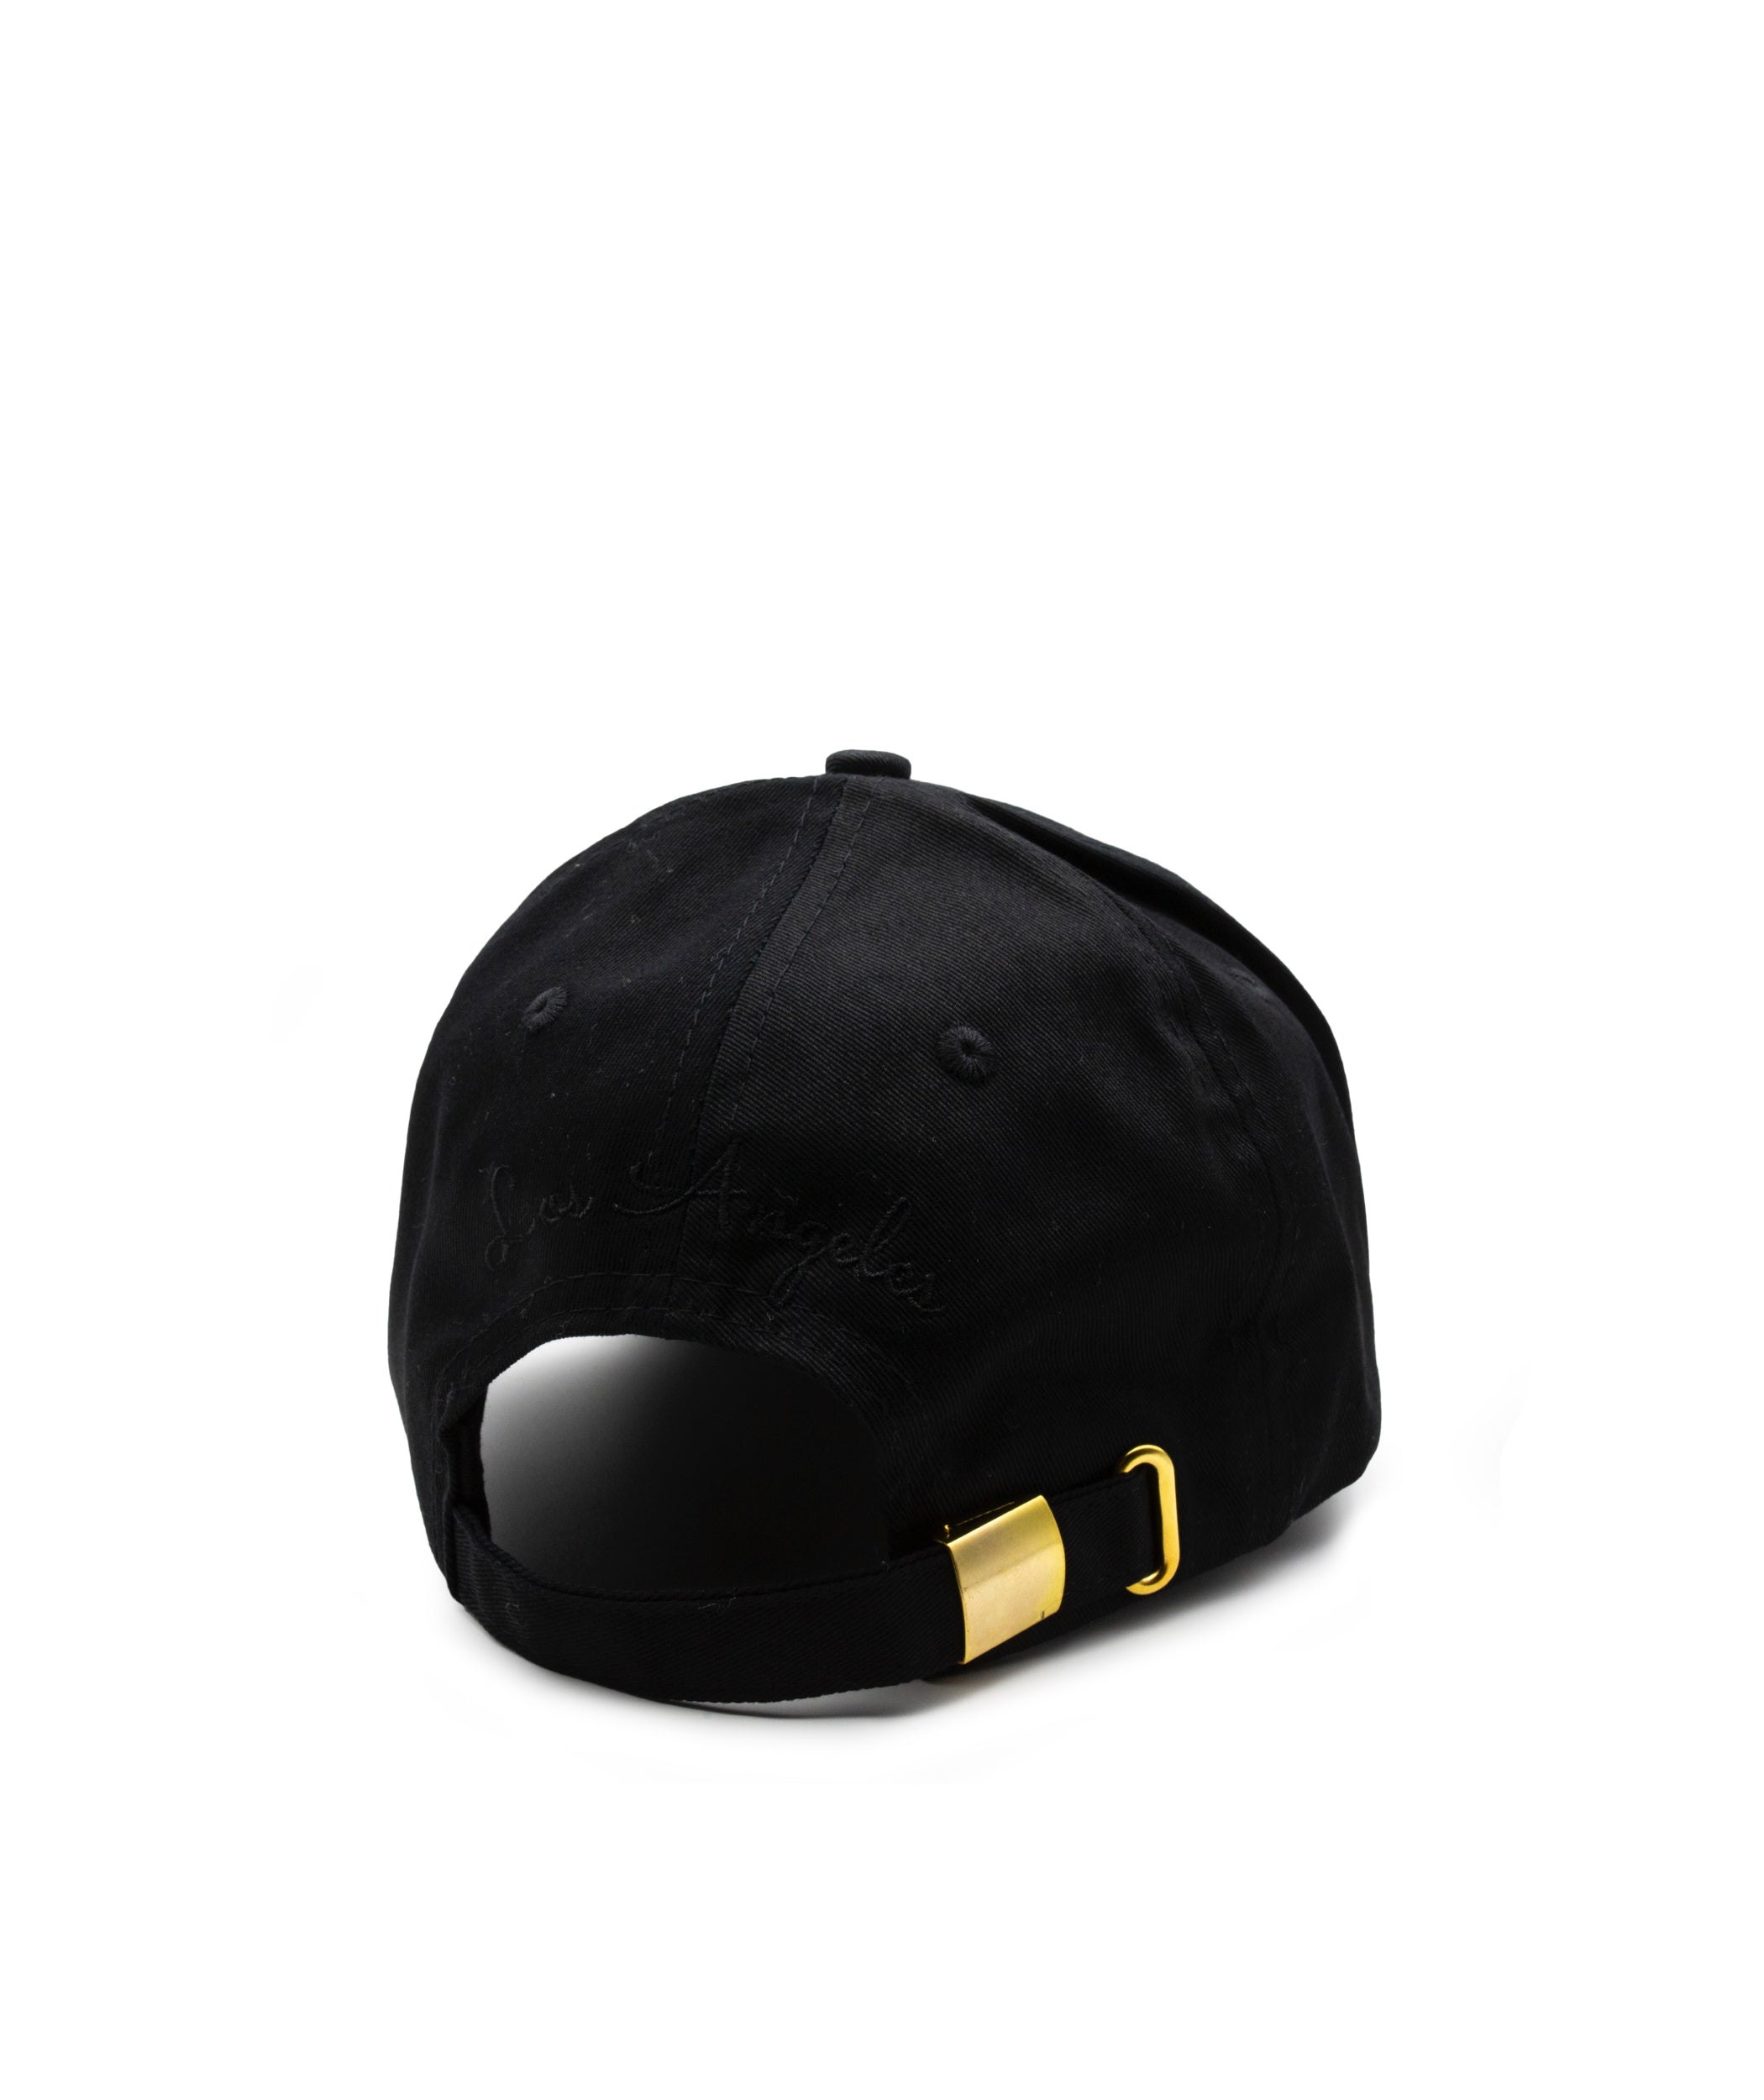 The Classic Ball Cap - Black on Black